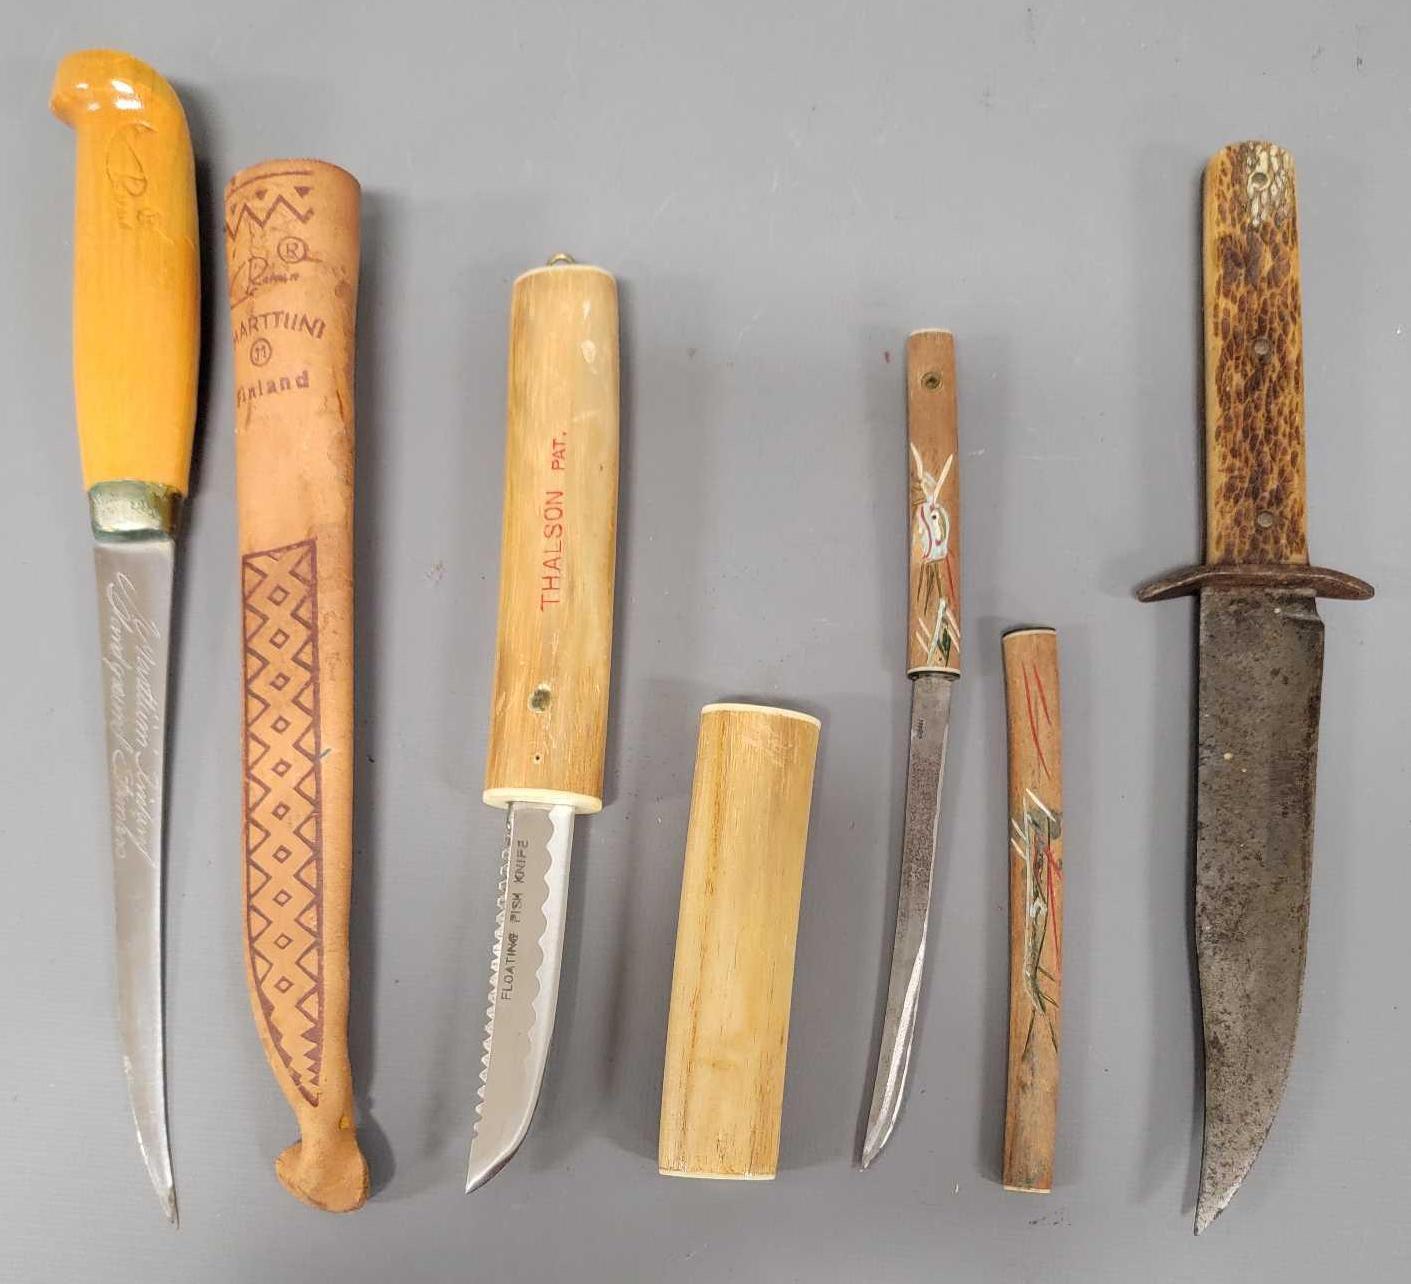 Four knives including vintage J Marttiini Finland